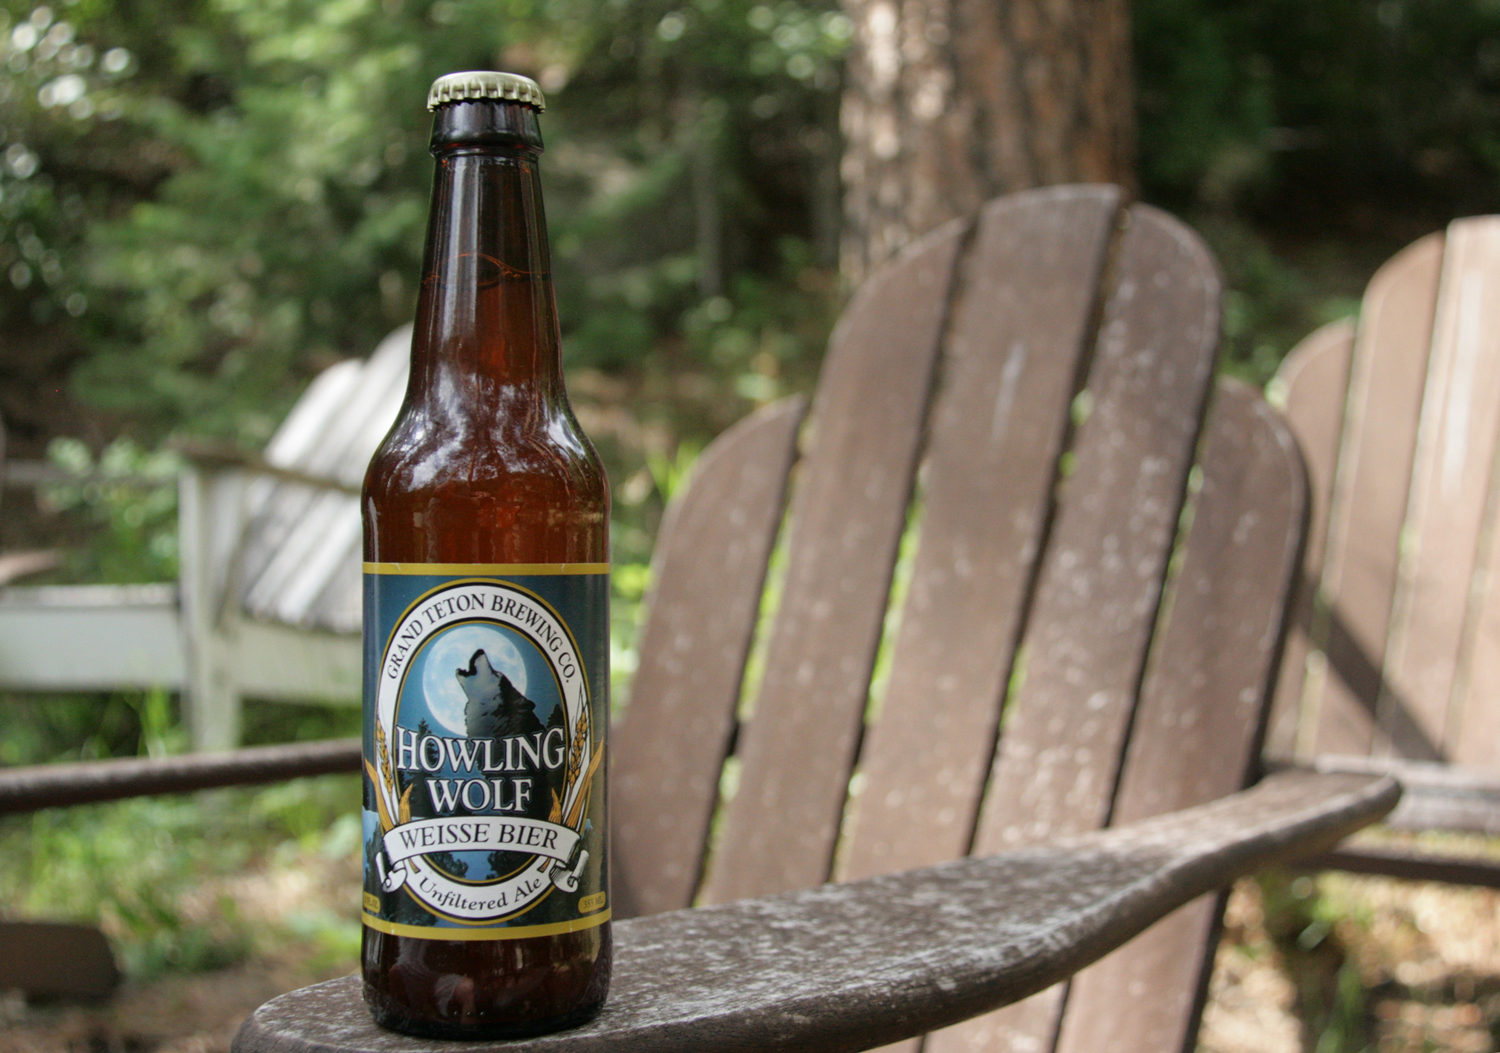 Grand Teton's Howling Wolf limited release seasonal summer bier.